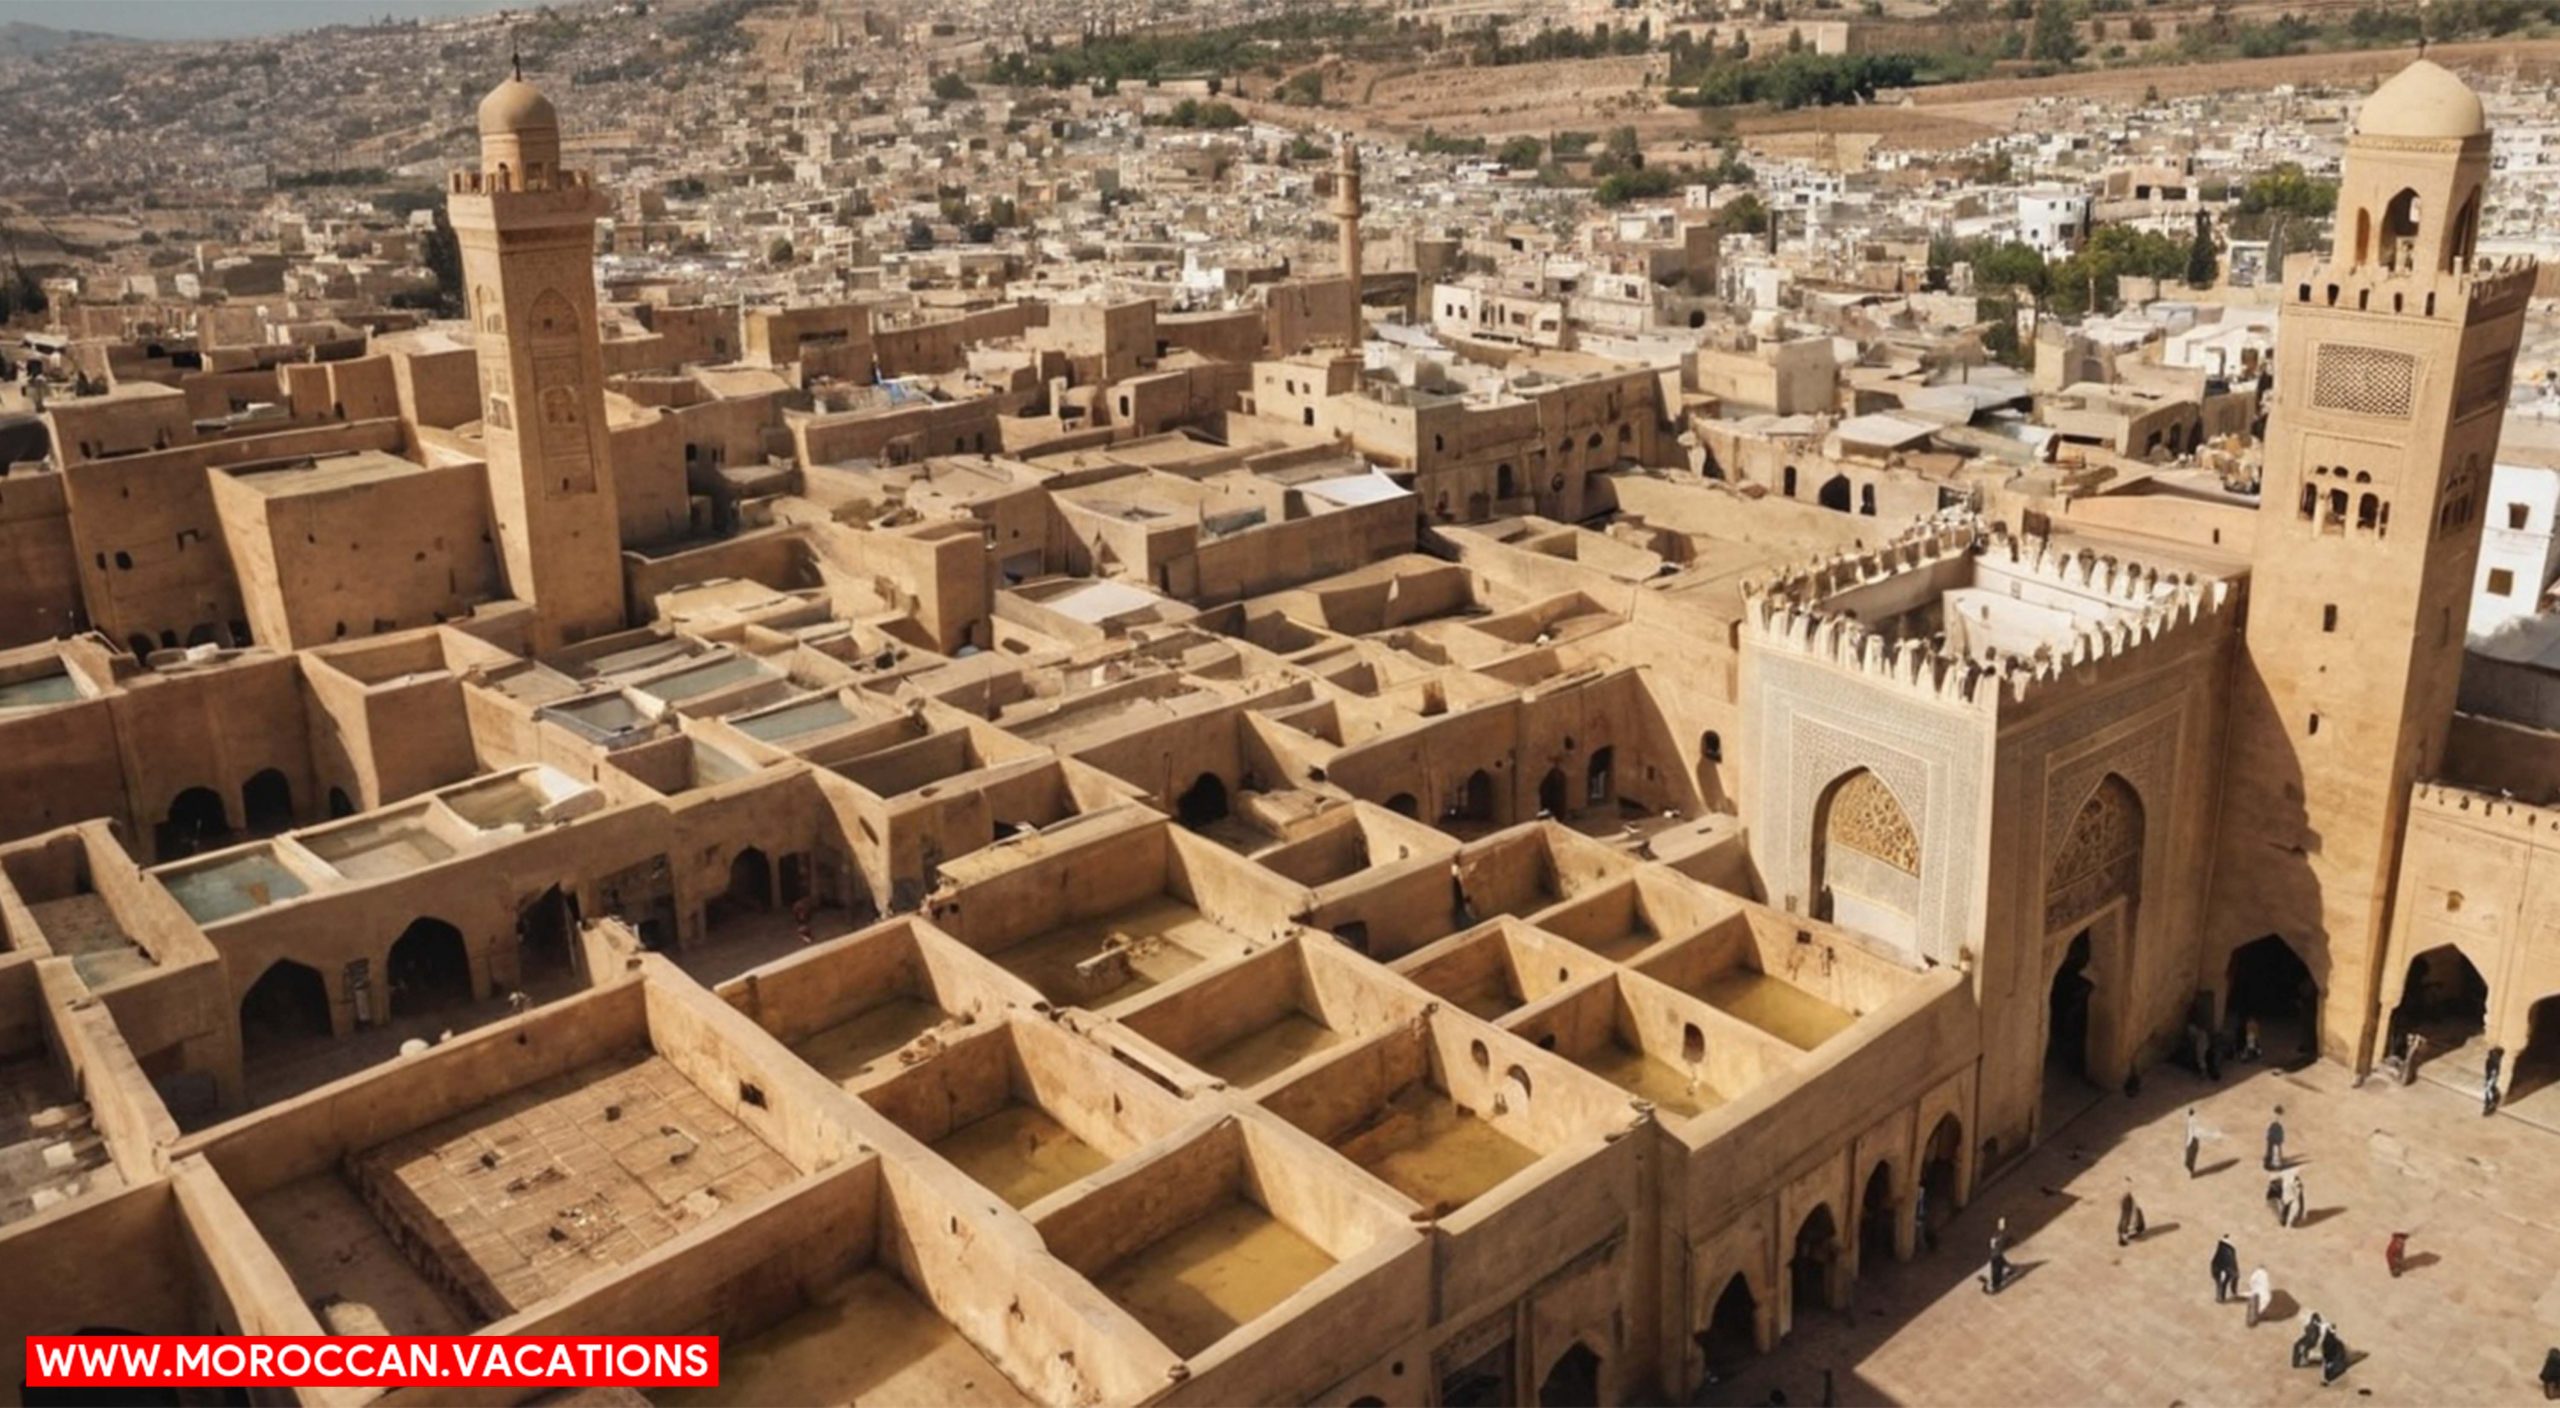 A vibrant image showcasing key landmarks in Fez Medina like Bab Boujloud, Al-Qarawiyyin Mosque.